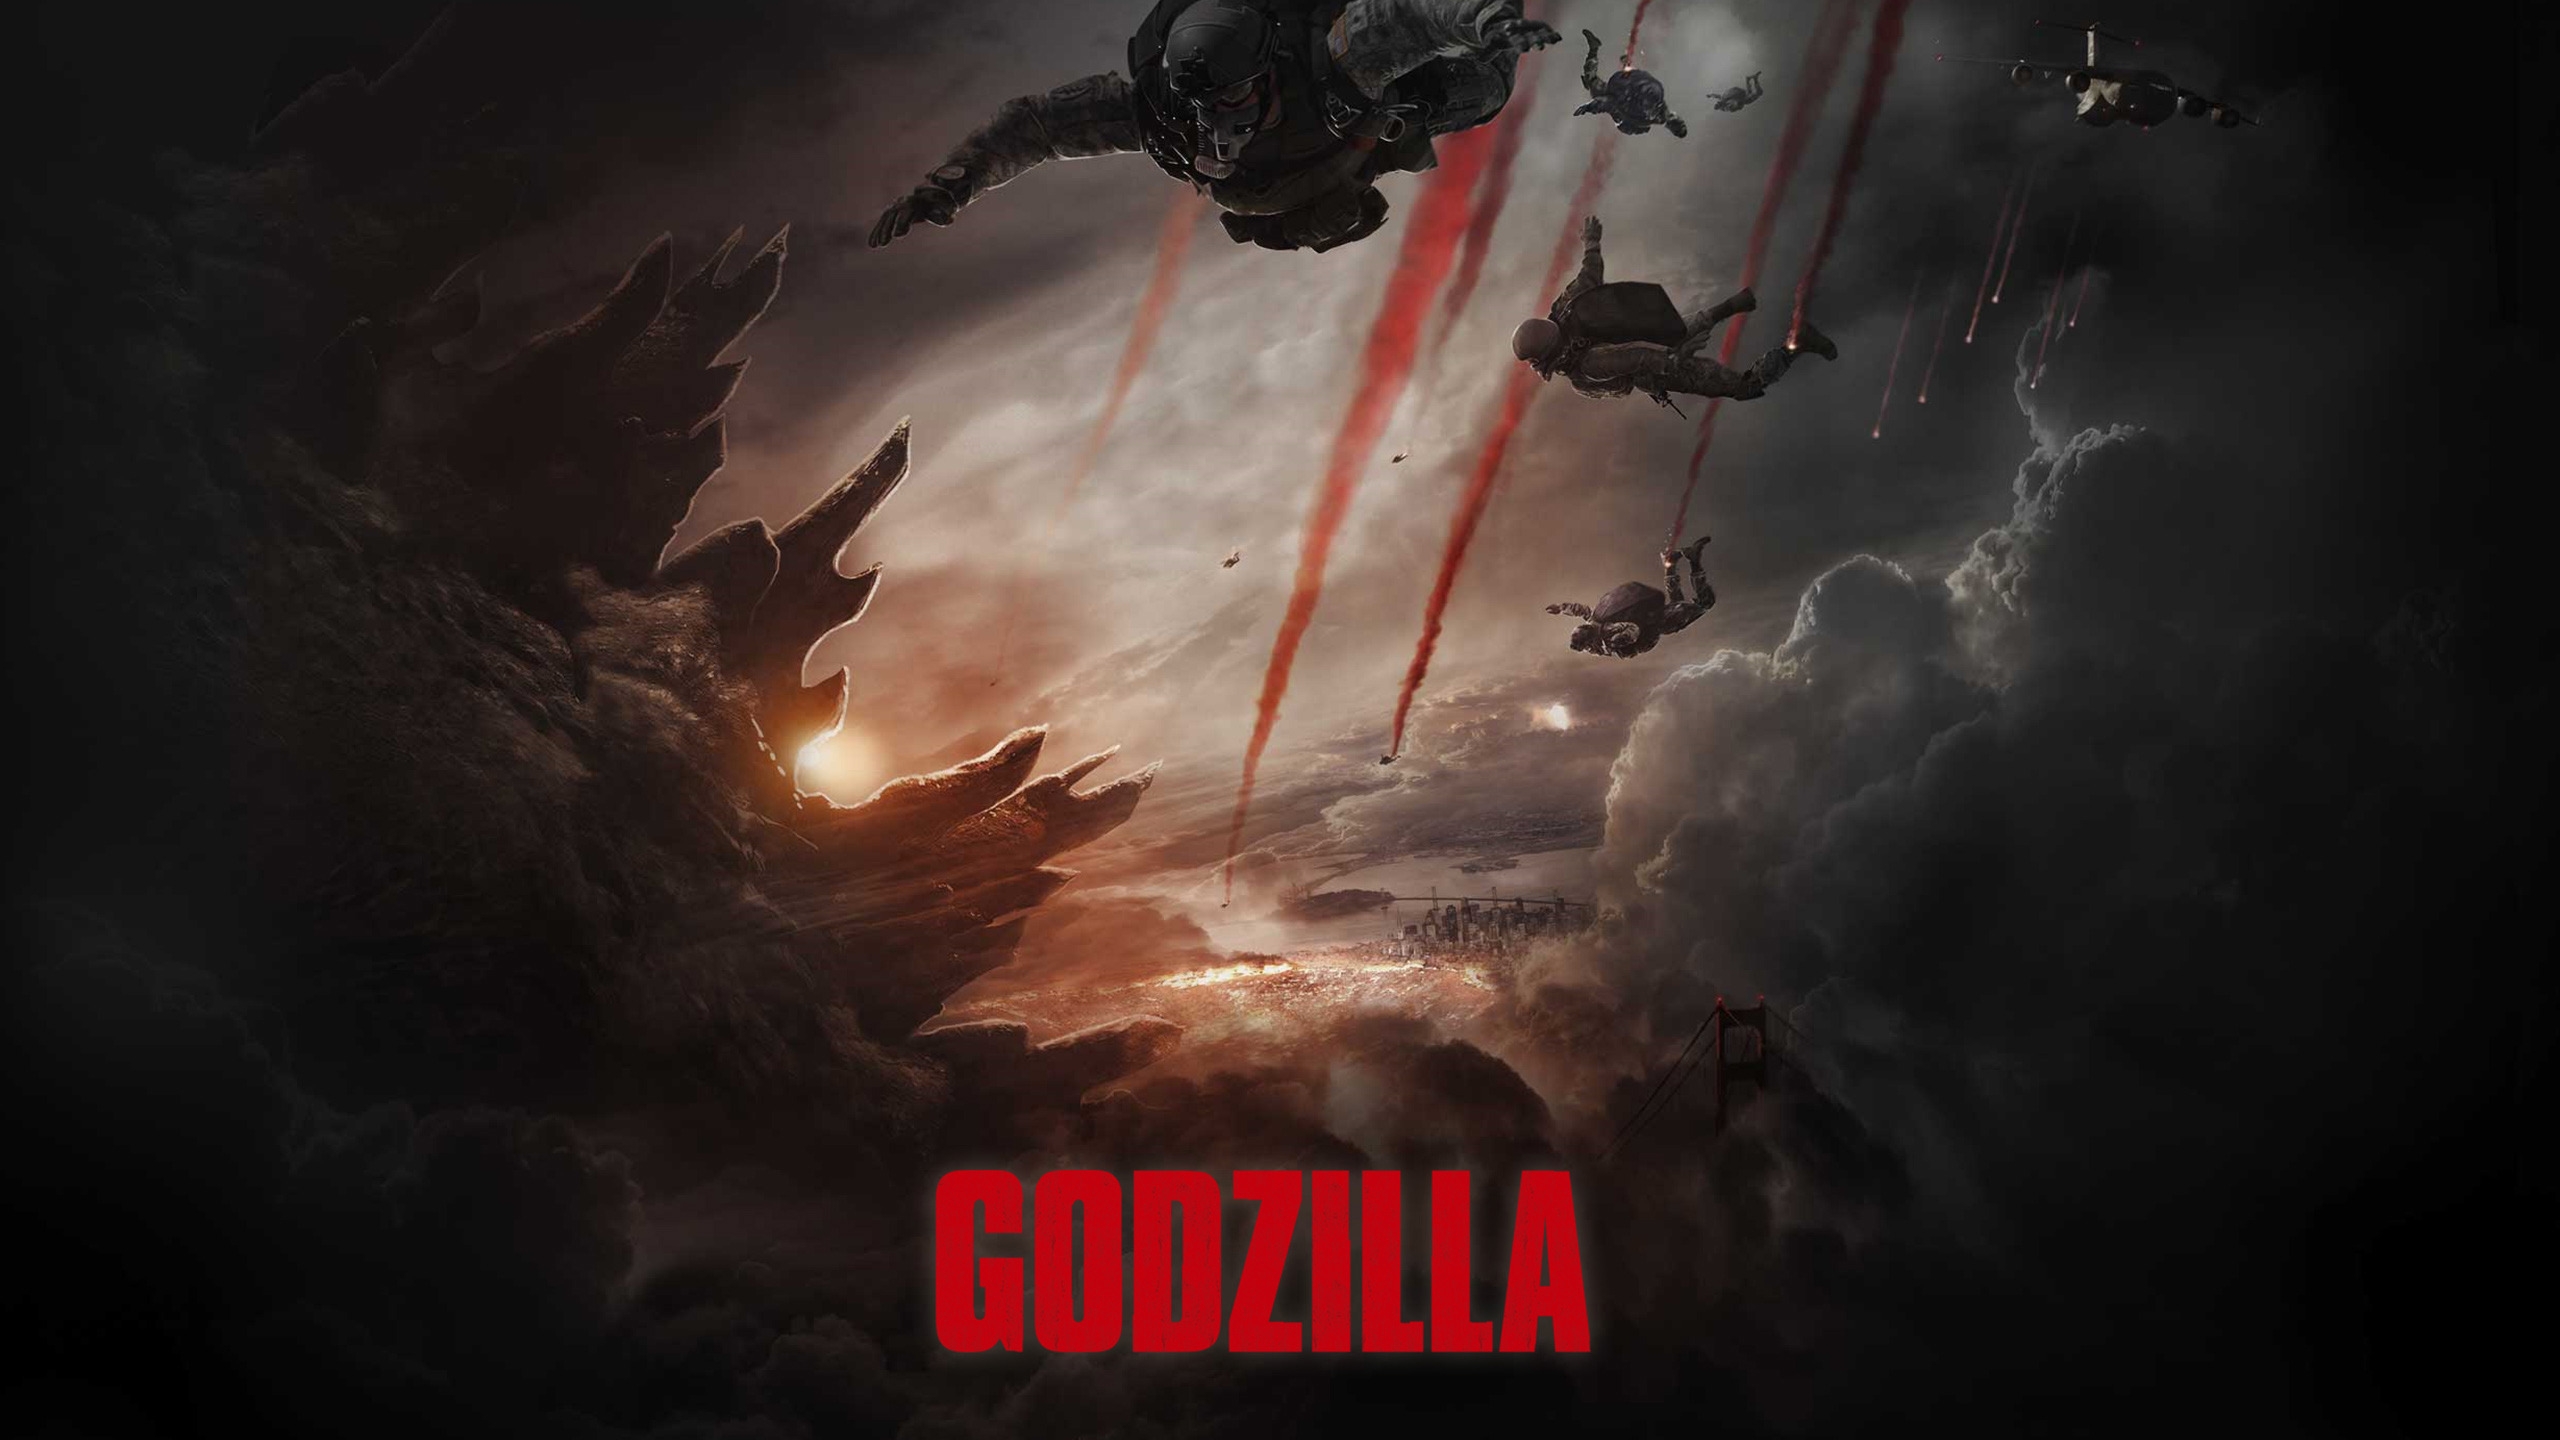 Godzilla 2014 Movie for 2560x1440 HDTV resolution